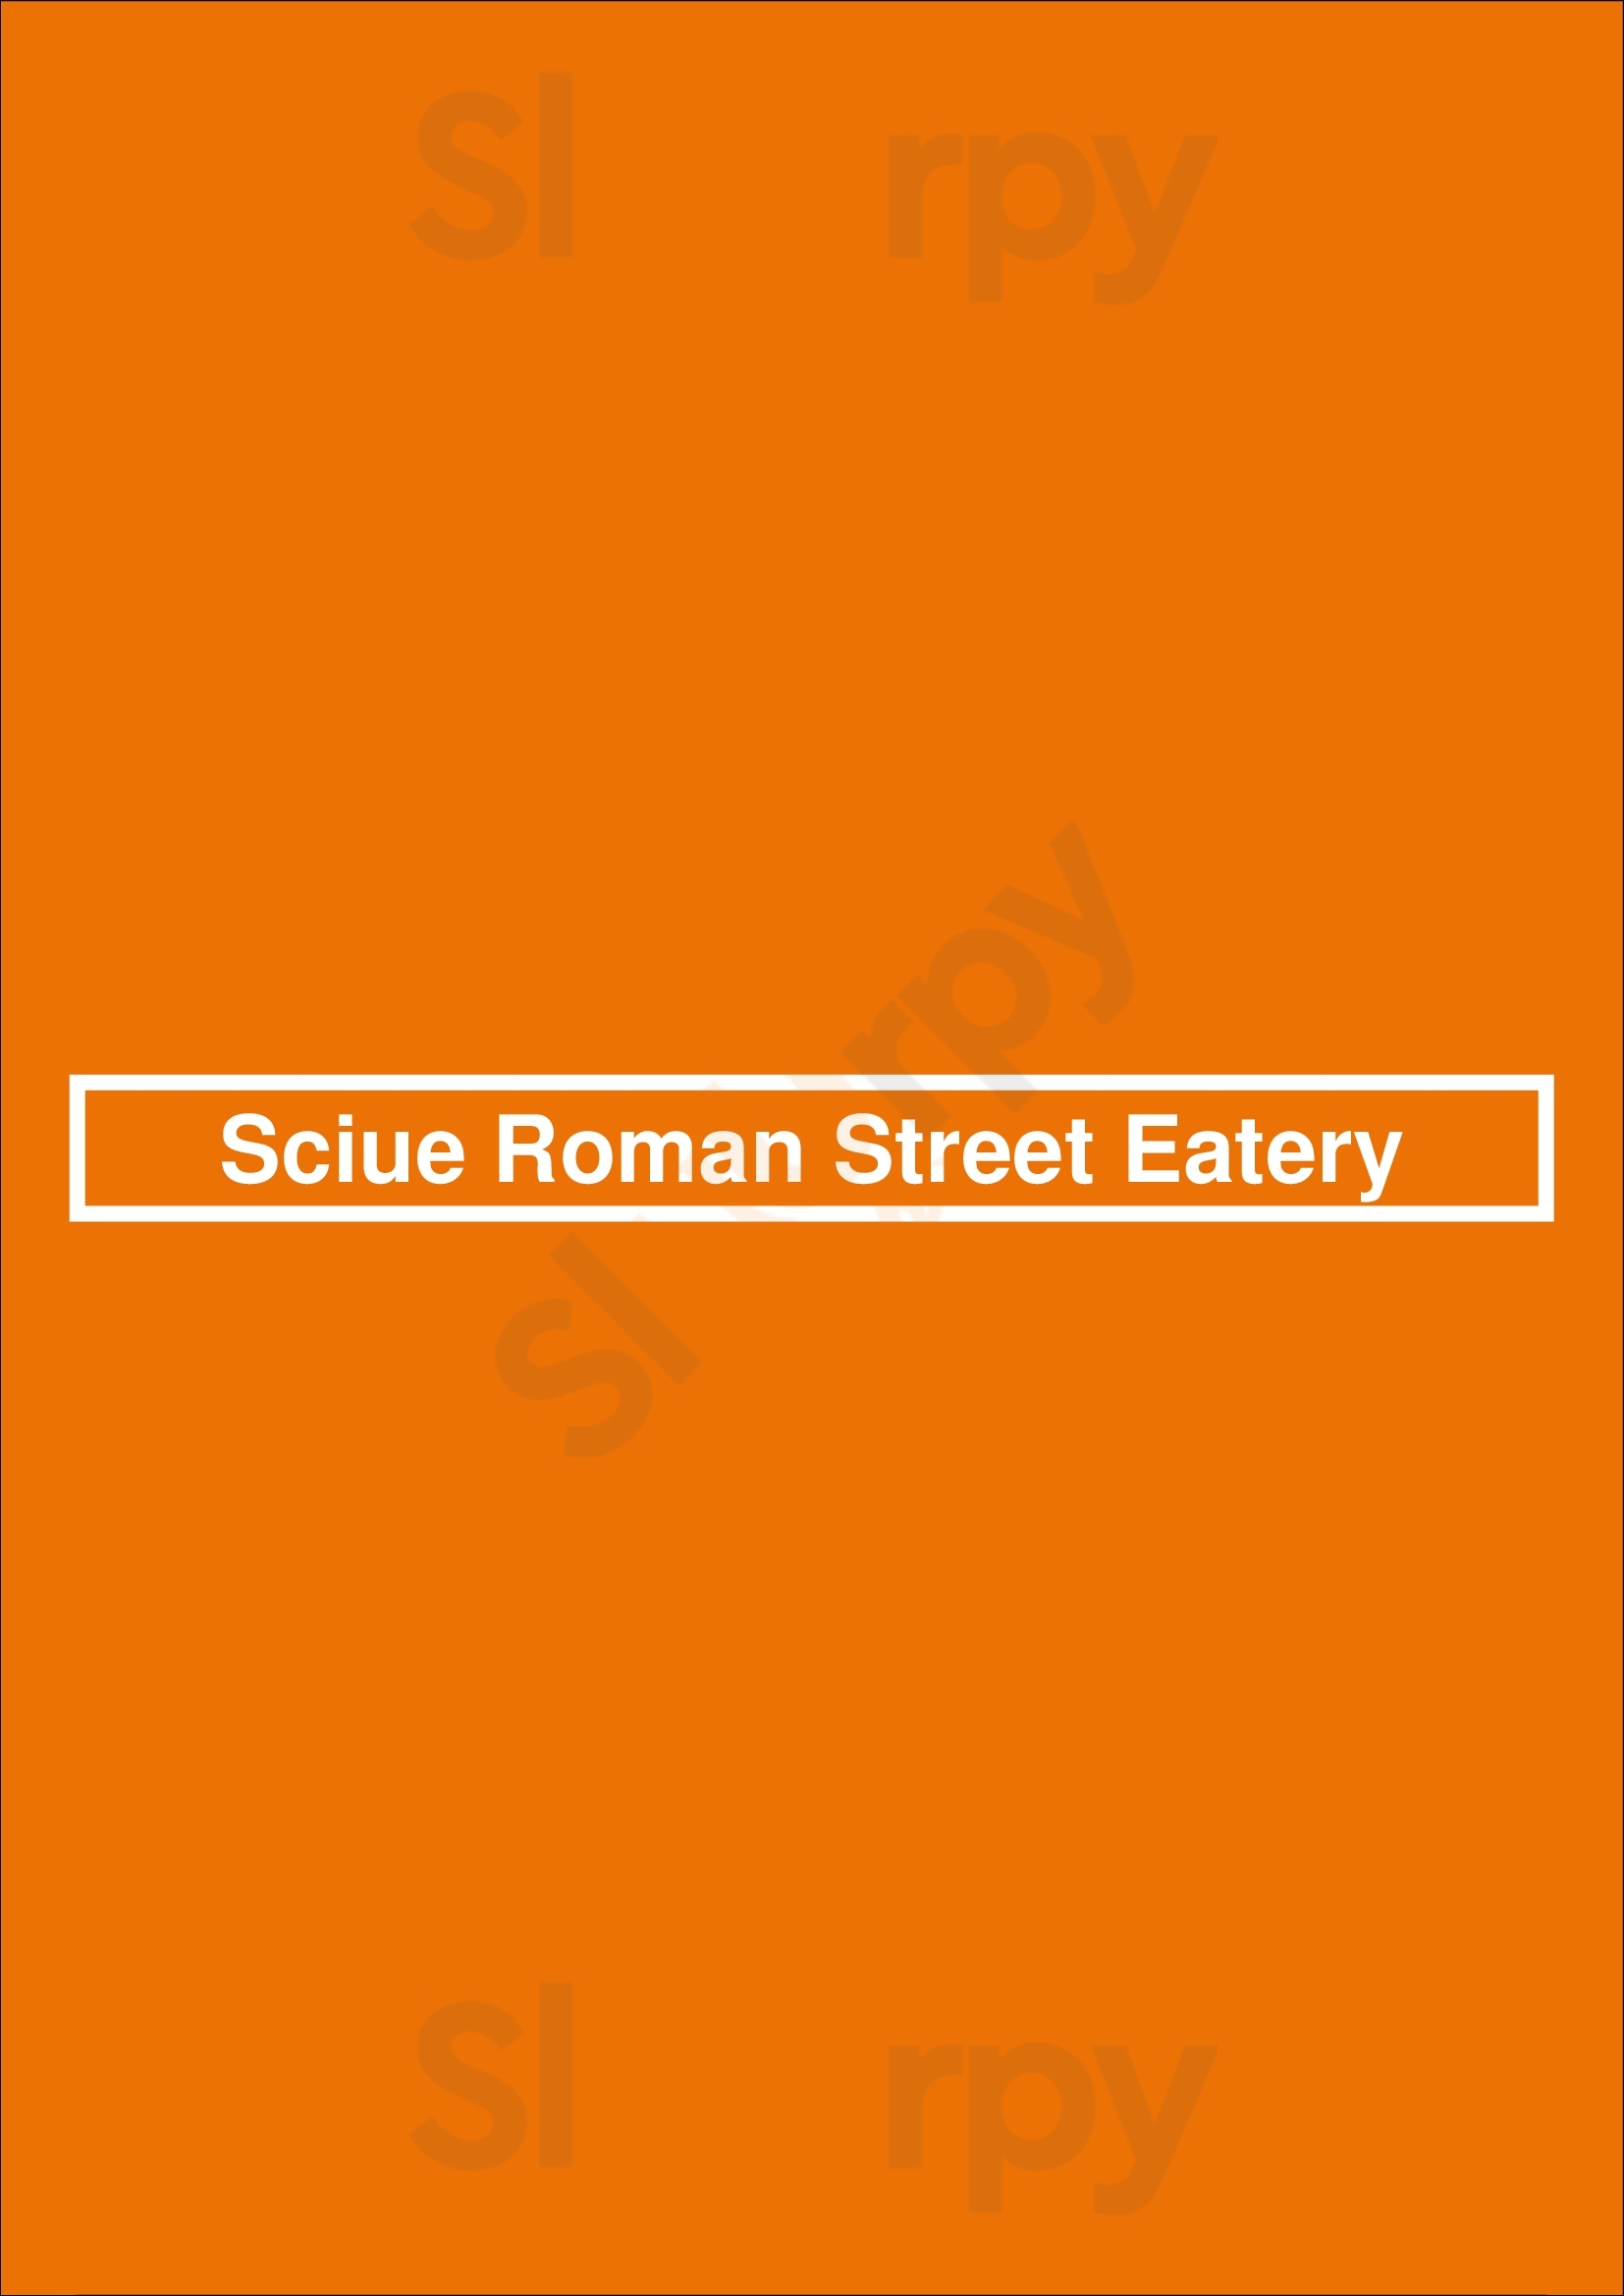 Sciue Roman Street Eatery Vancouver Menu - 1